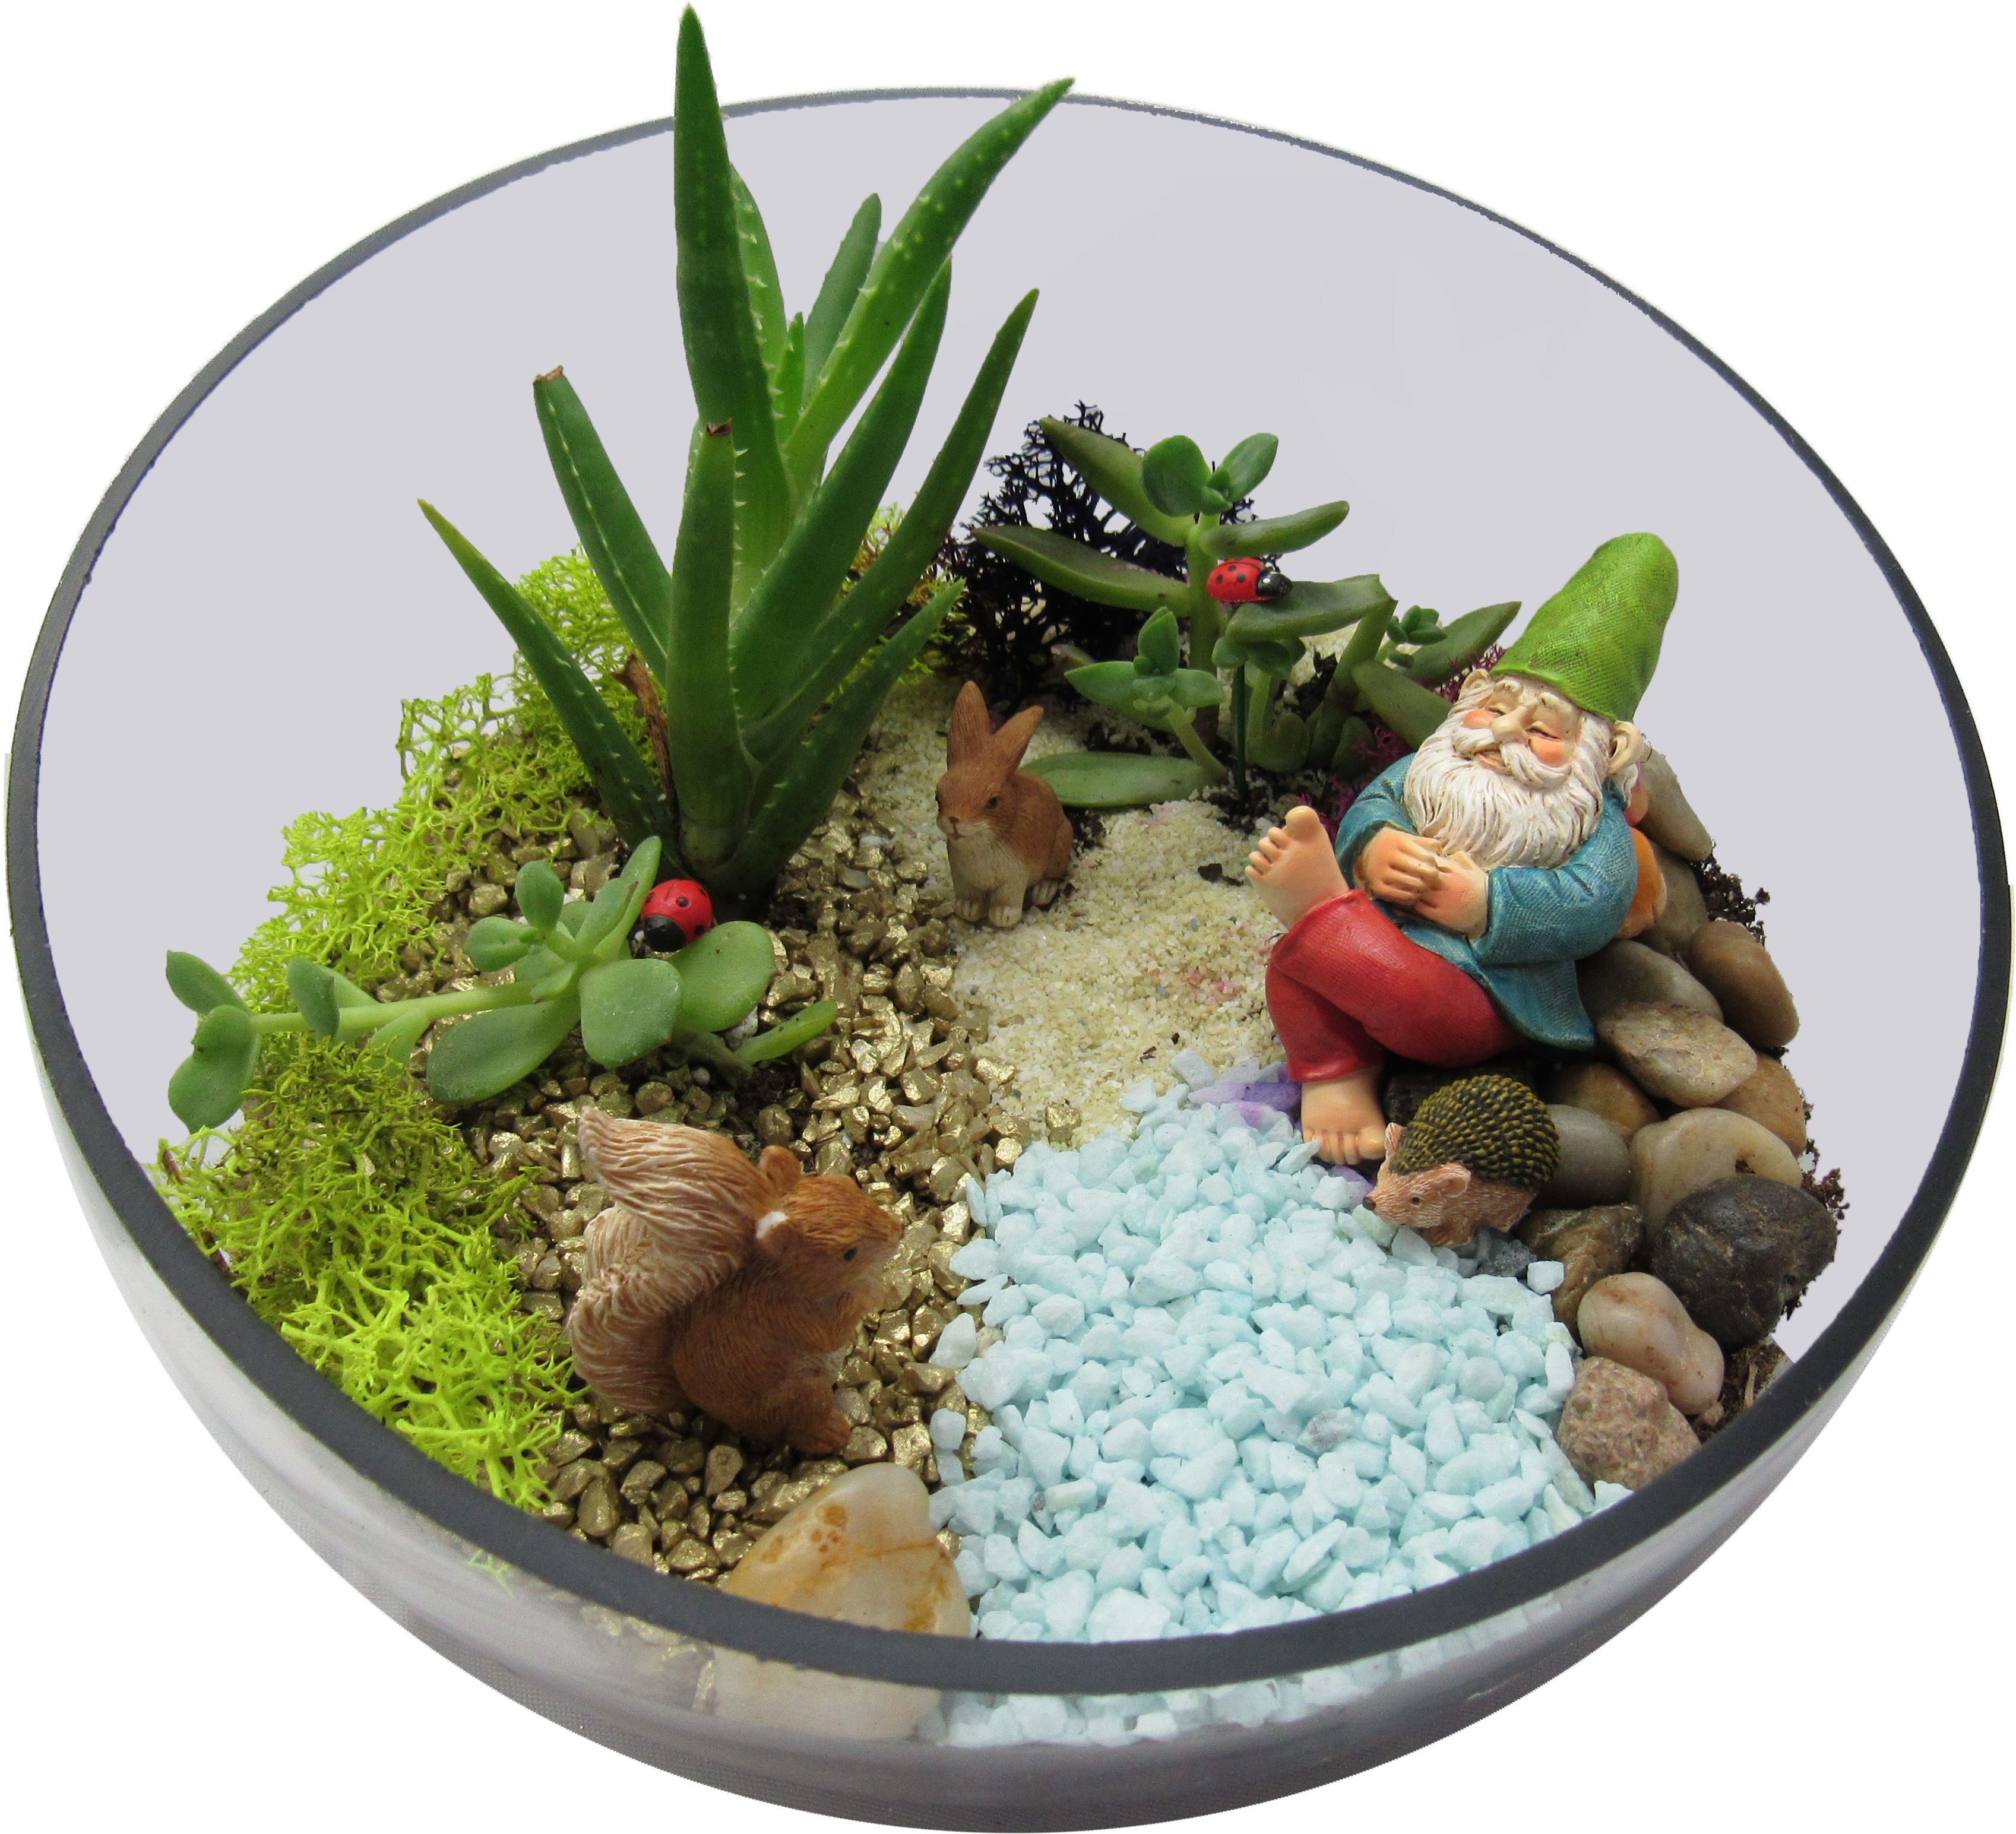 A Succulent Gnomes Friends Terrarium plant nite project by Yaymaker